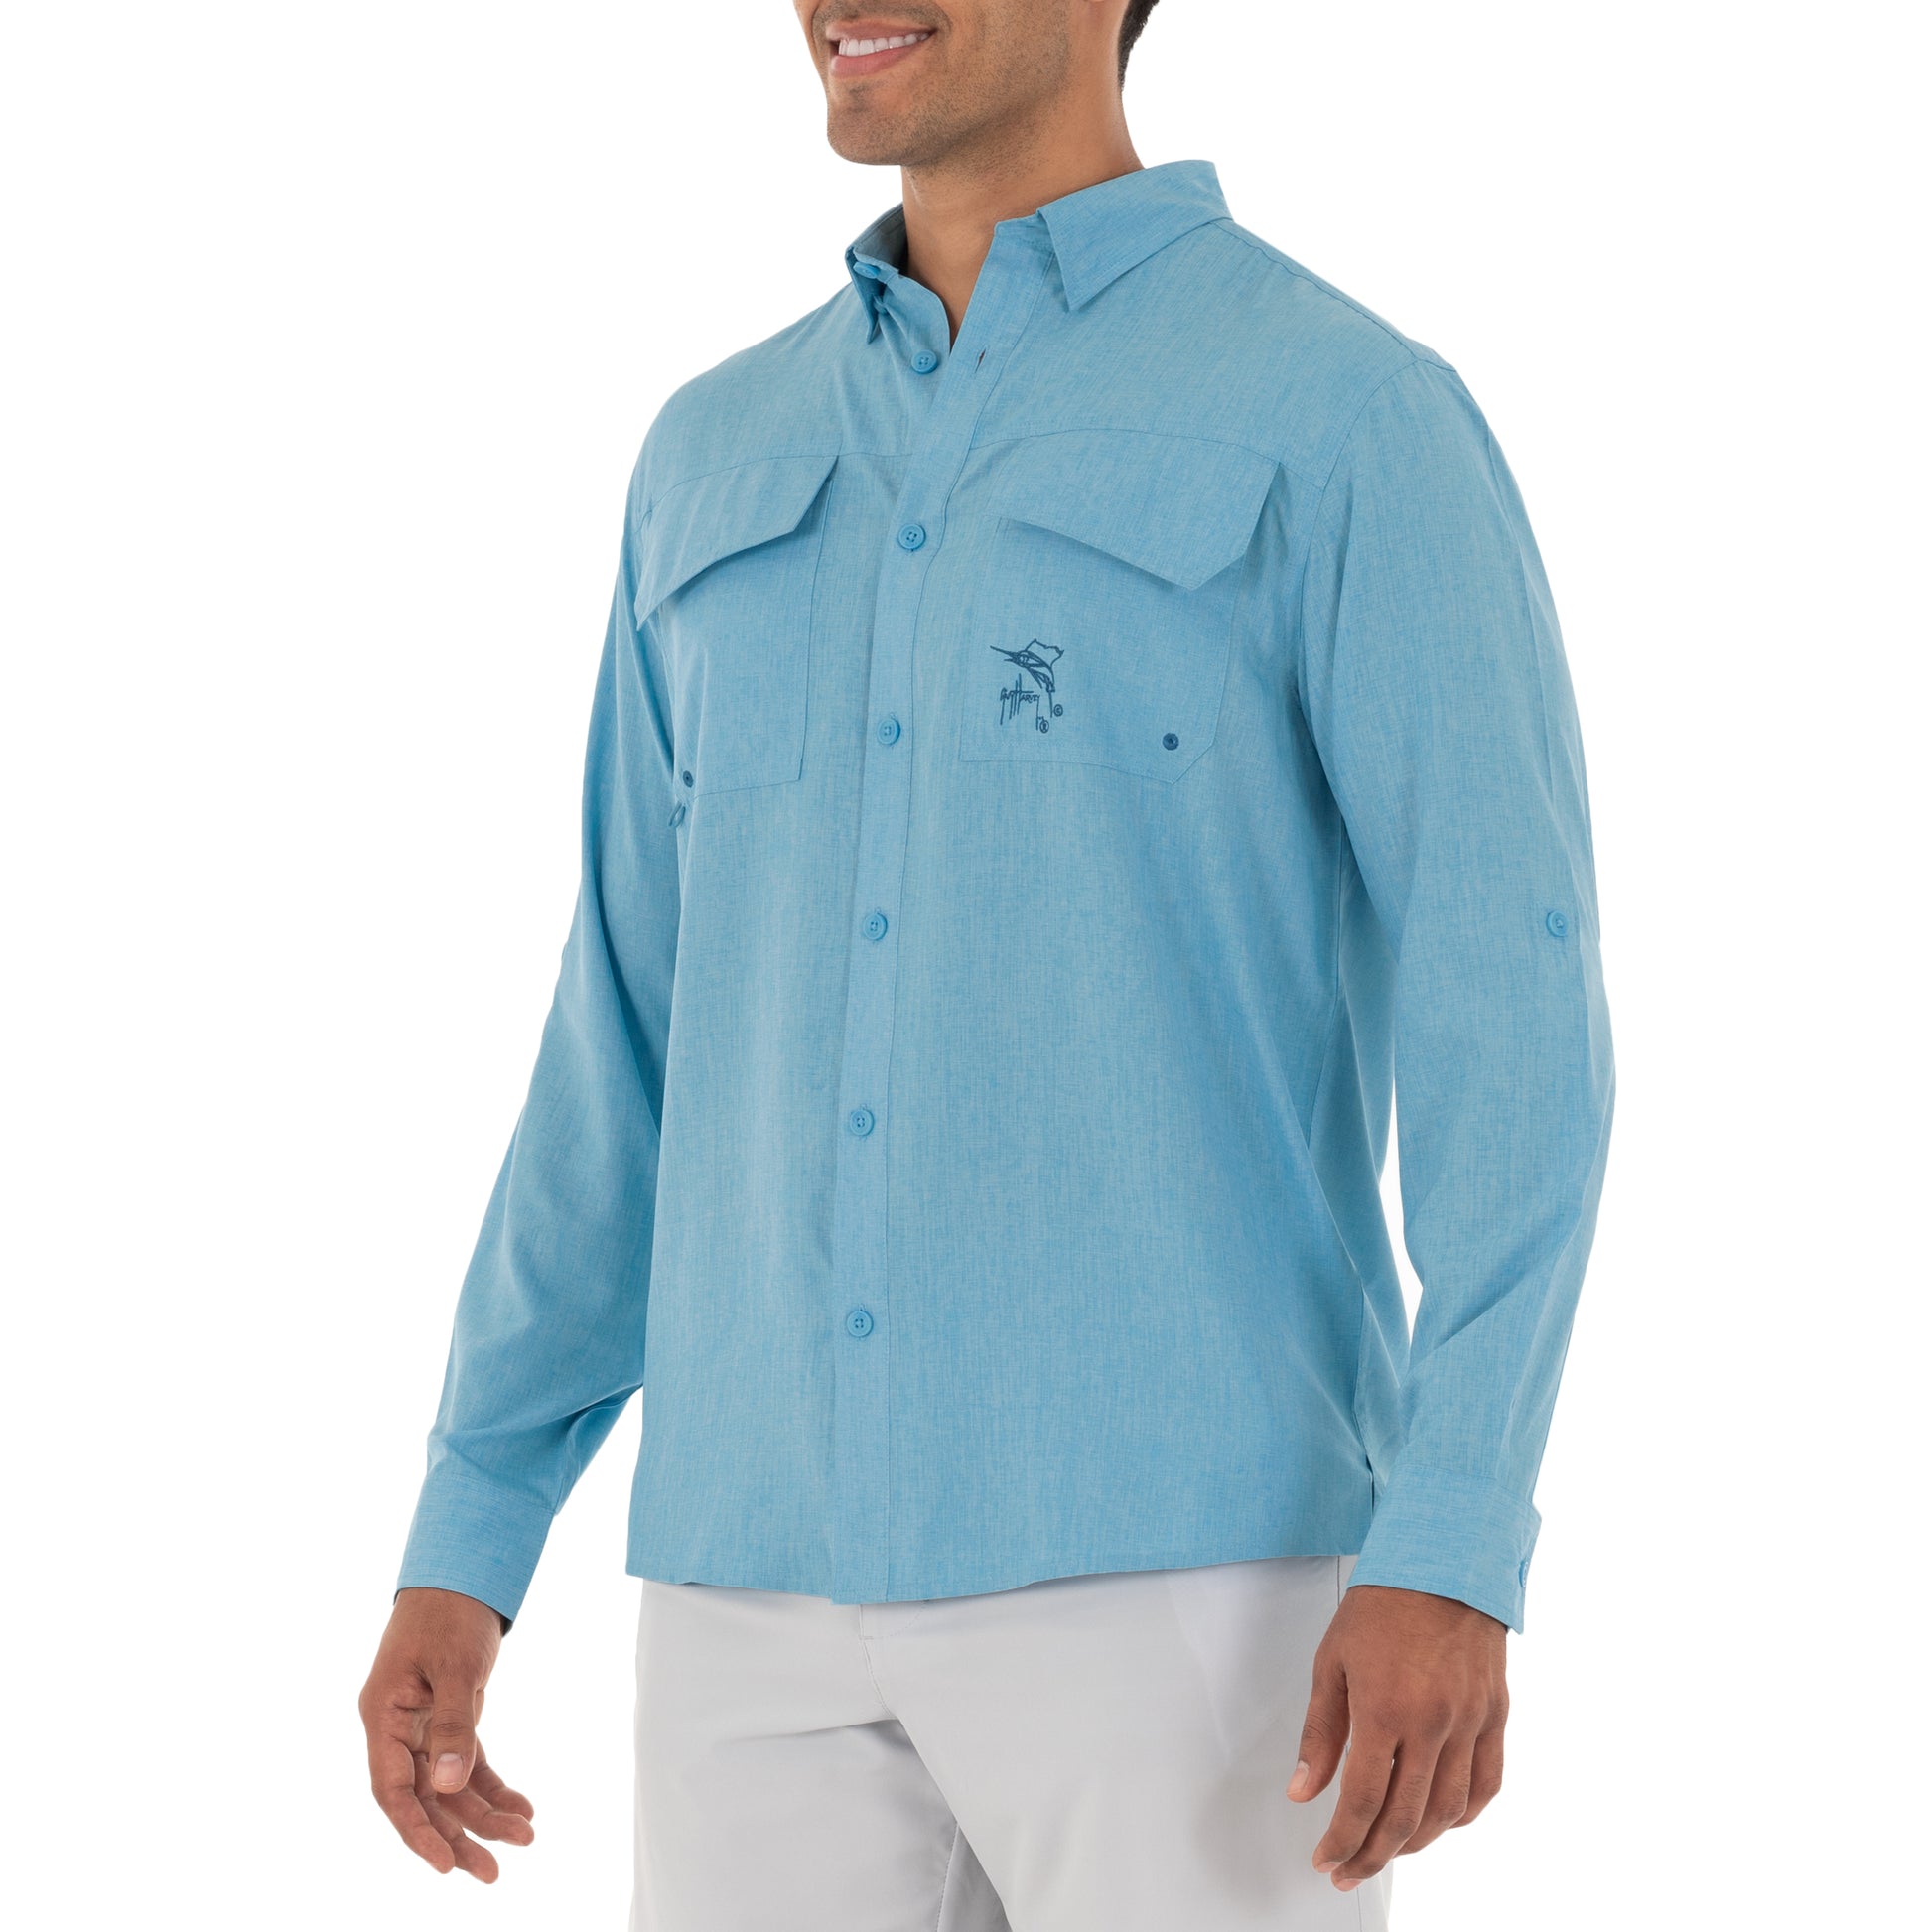 Men's Long Sleeve Heather Textured Cationic Blue Fishing Shirt View 1